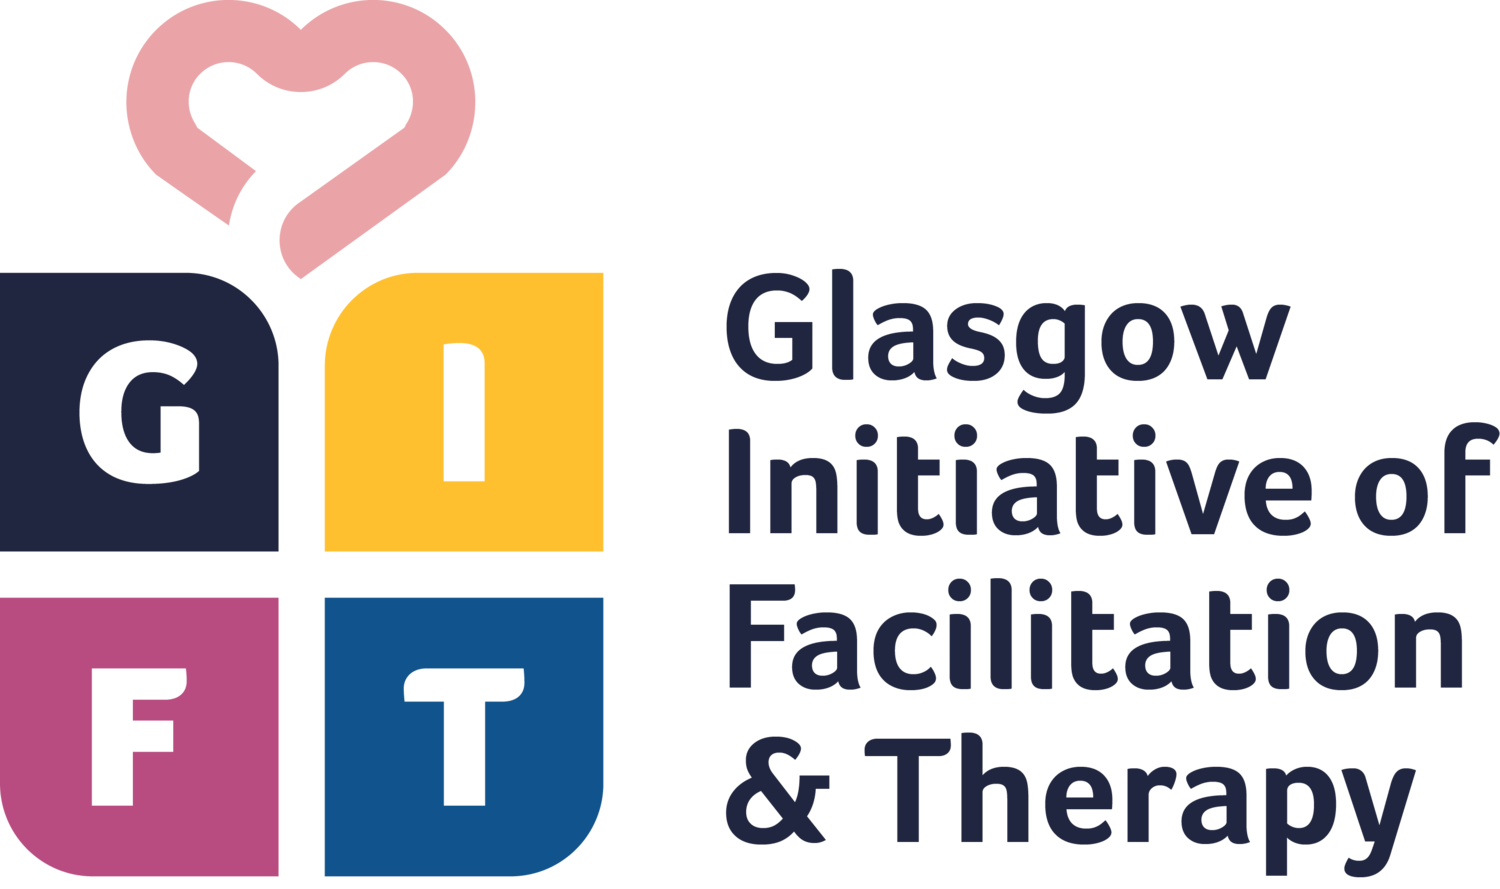 Glasgow Initiative of Facilitation &amp; Therapy